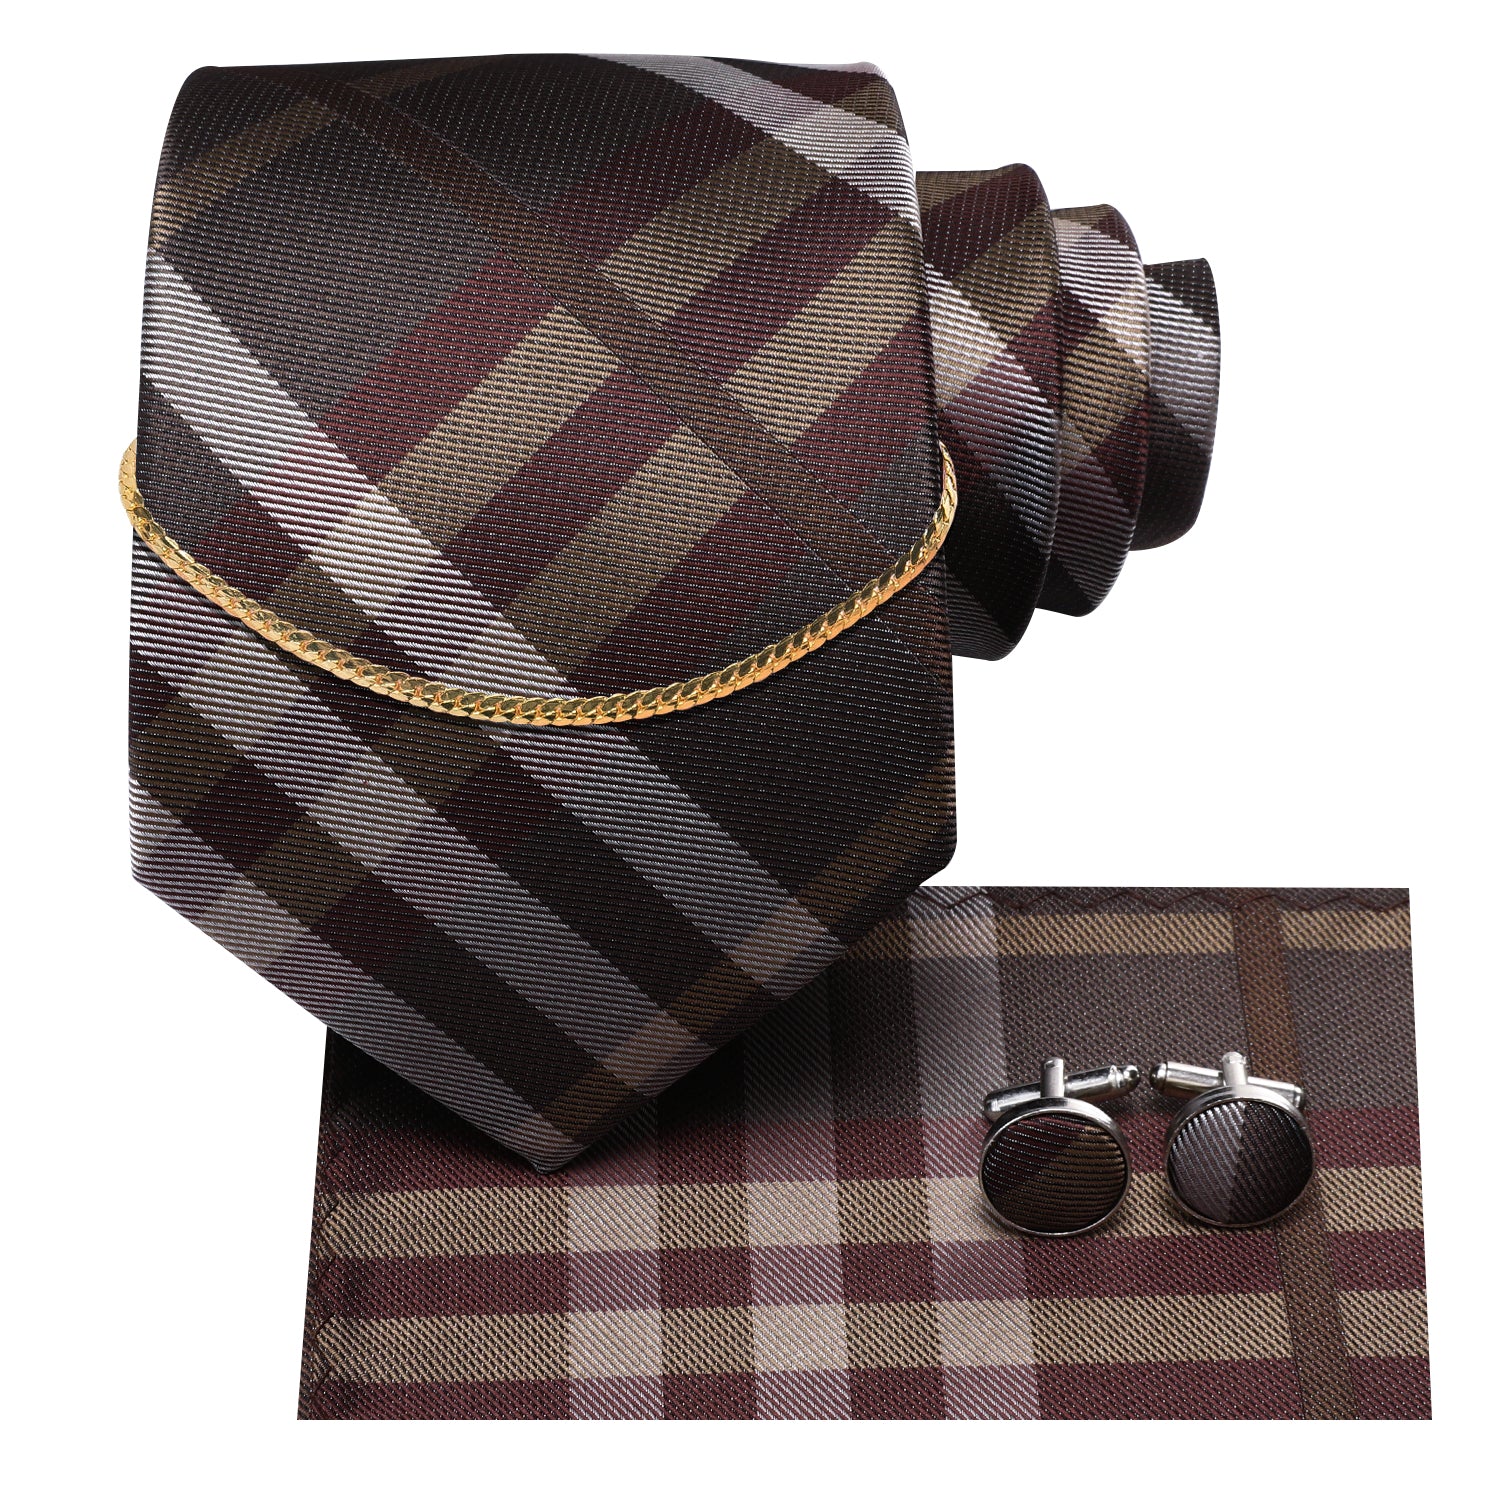 Classic Brown Plaid Silk Men's Tie Set Tie Pocket Square Cufflinks Set With Golden Chain